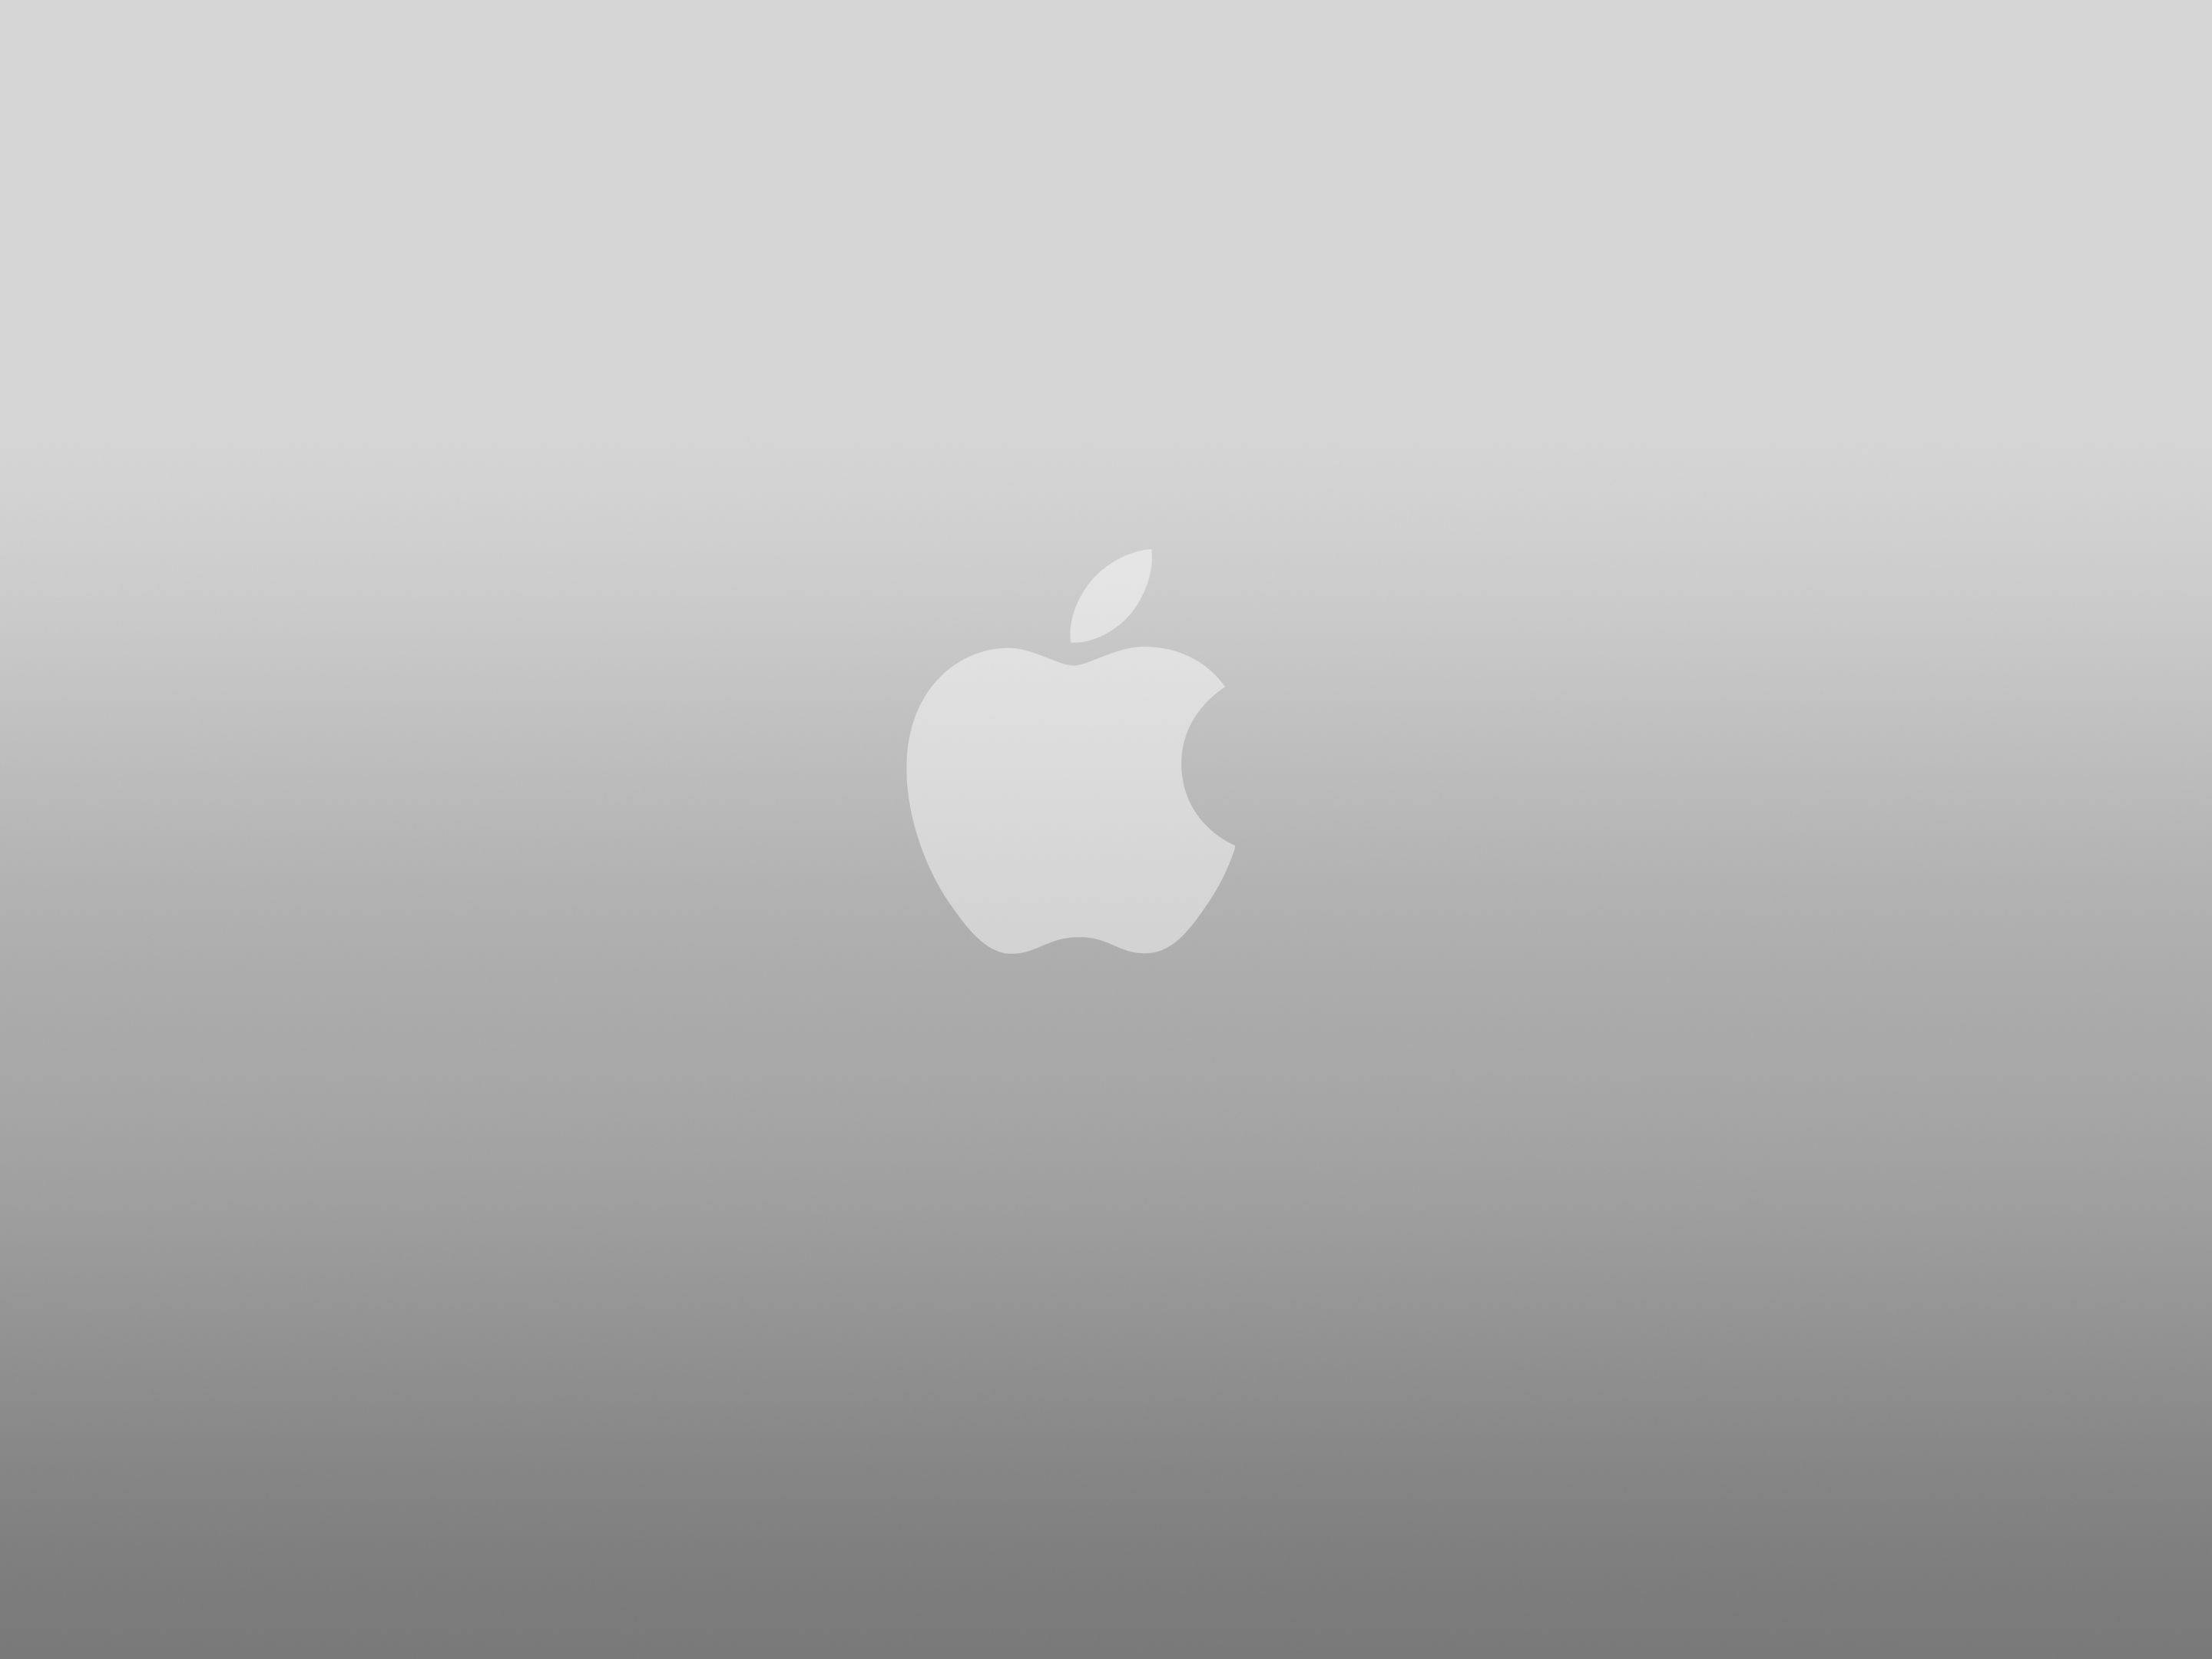 Apple Logo For Wallpapers